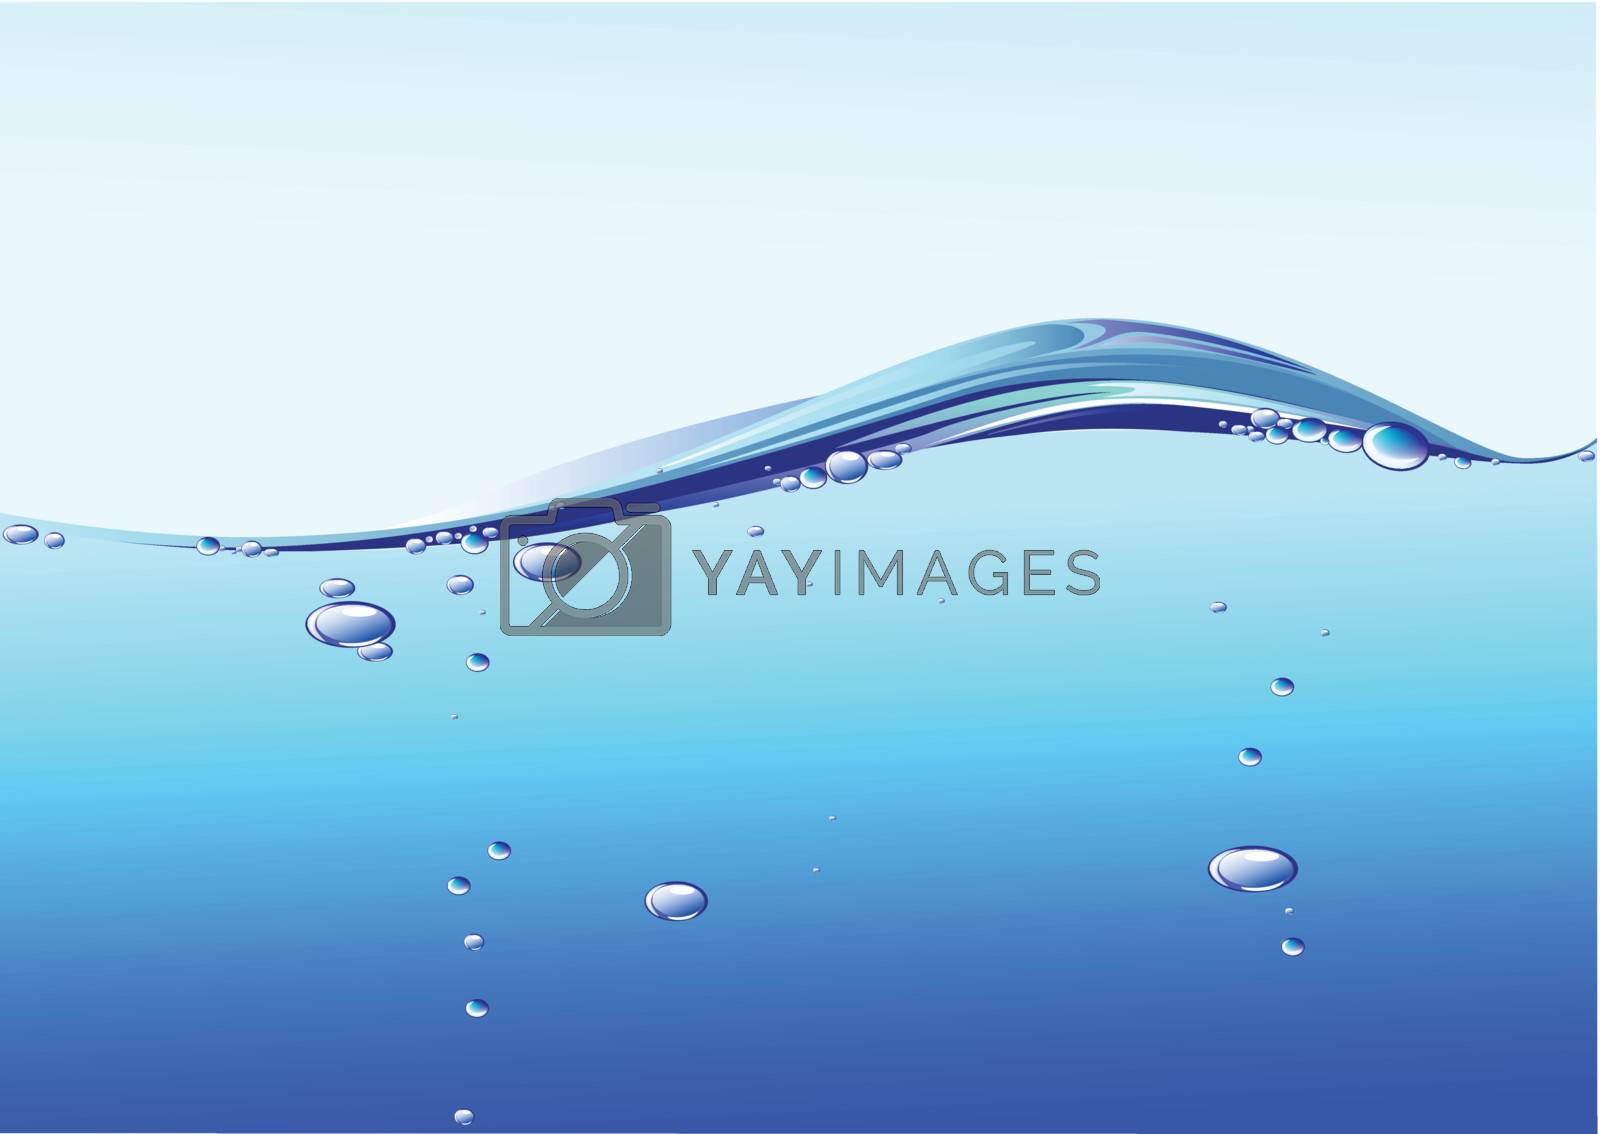 Royalty free image of Water by Matamu